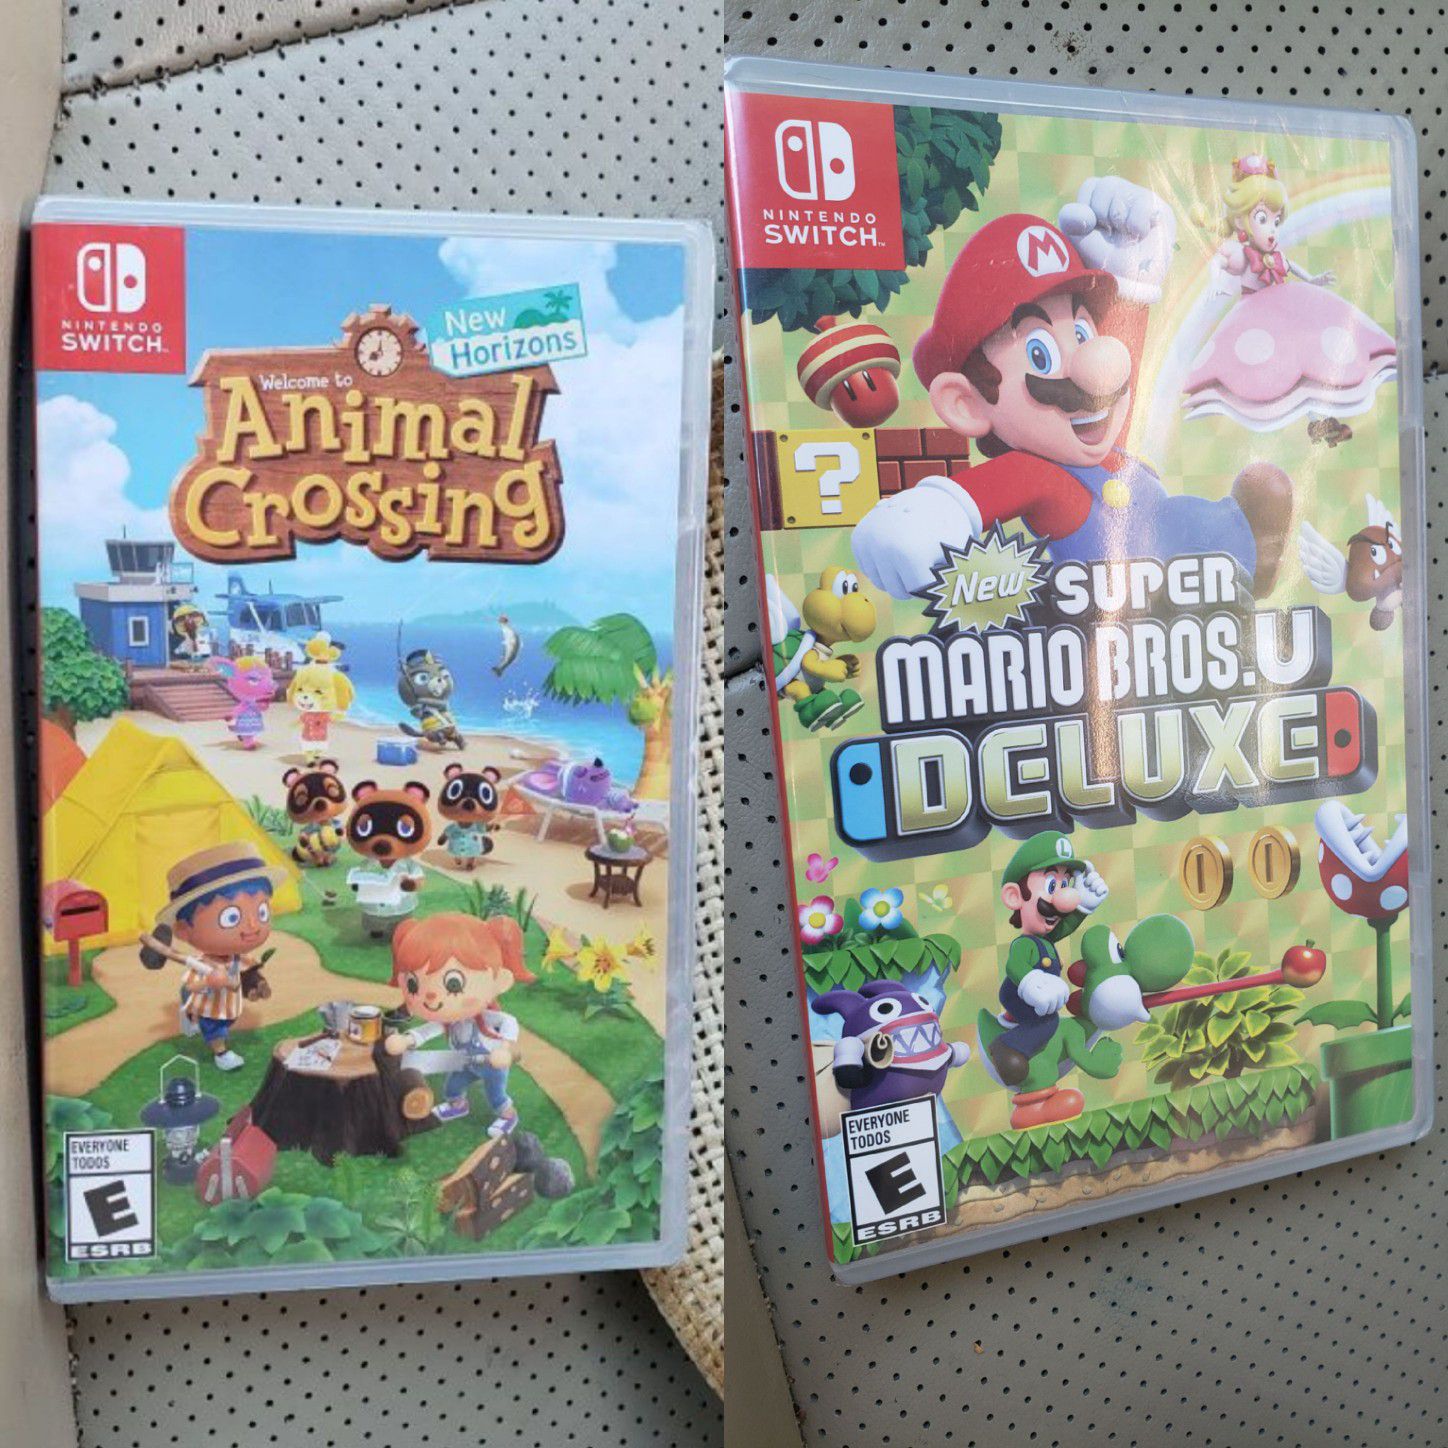 Animal Crossing & Mario Bros U Deluxe U Nintendo Switch game brand new Sealed never opened